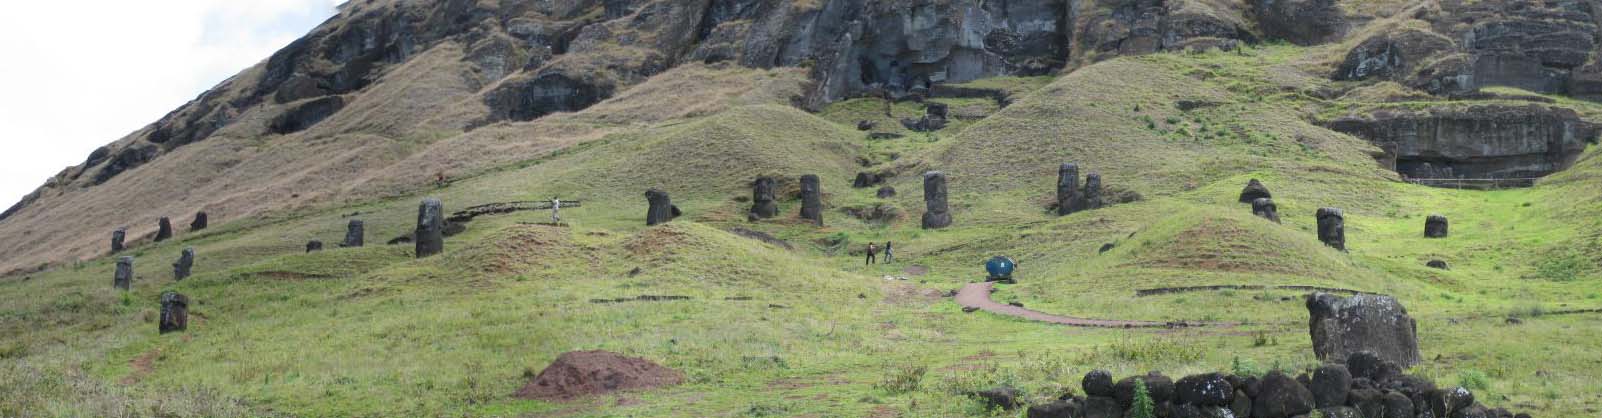 moai mountain